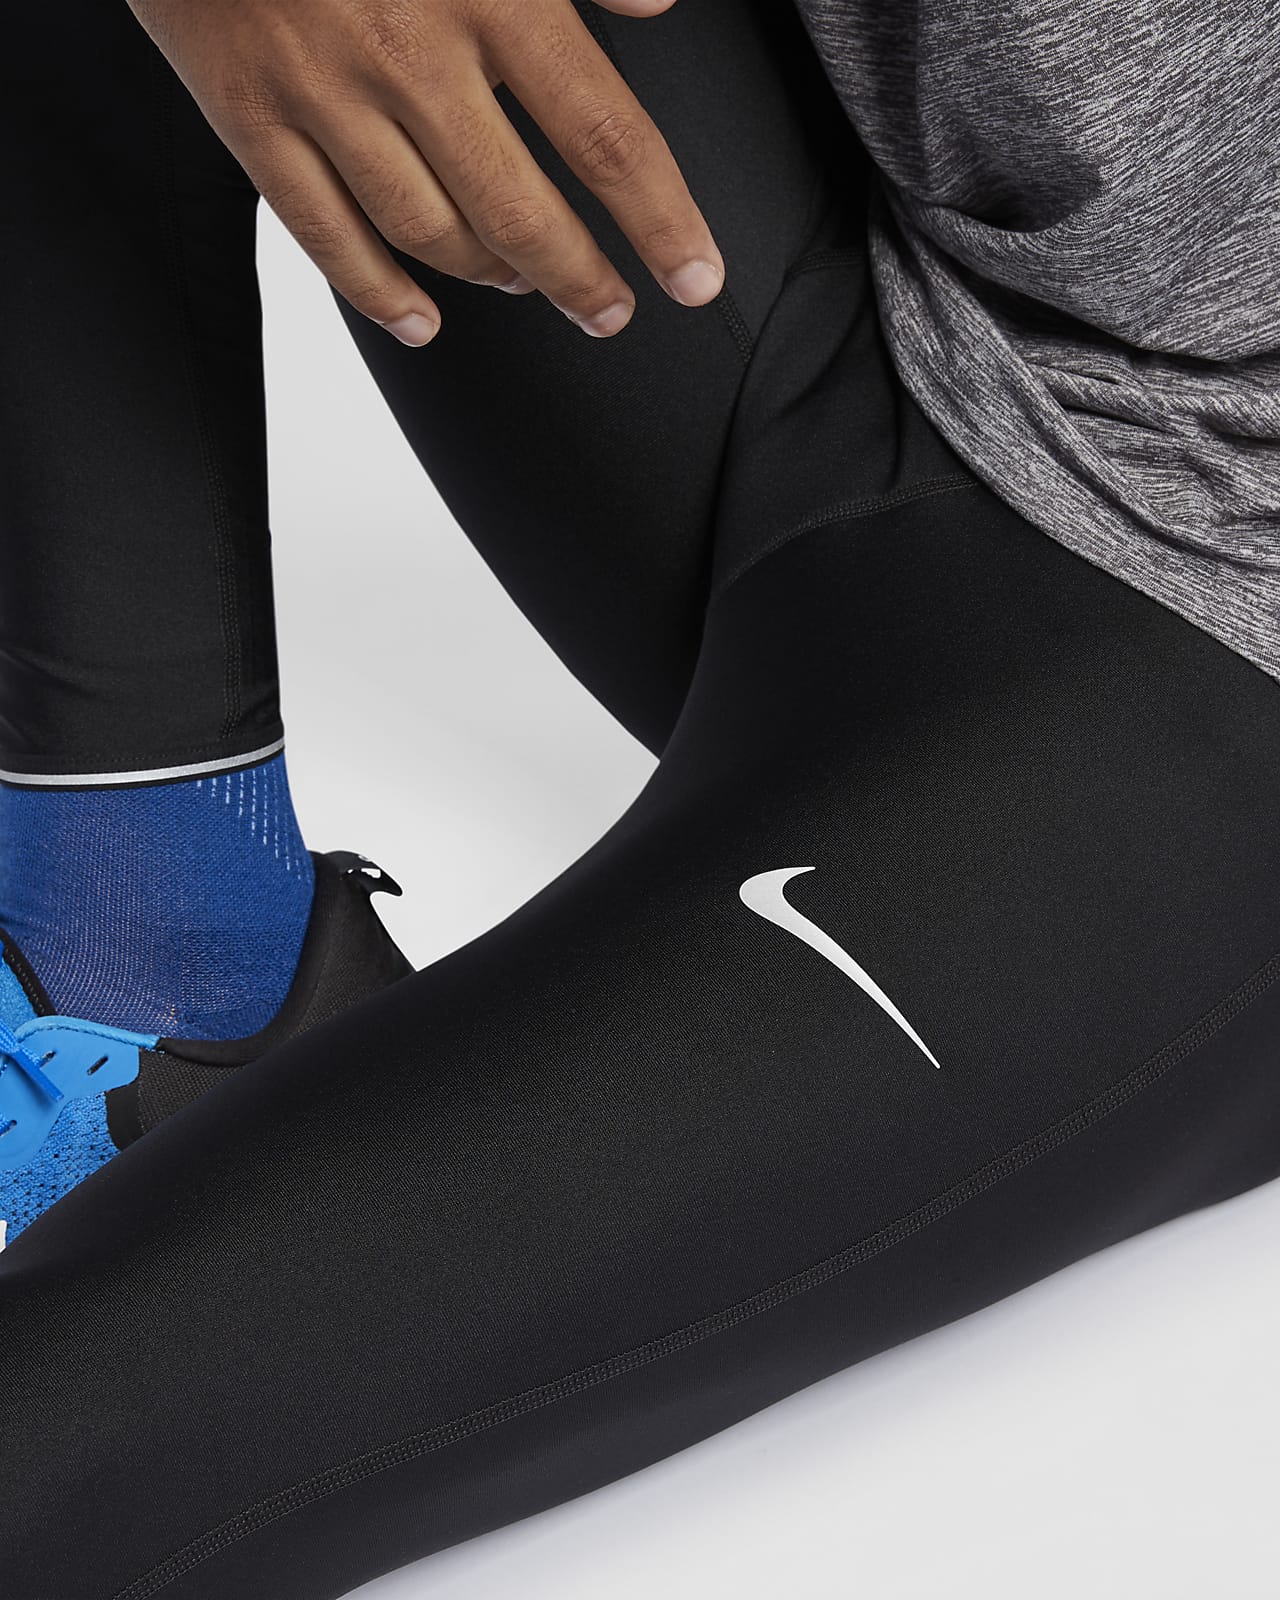 Nike Power Tech Mens Running Tights Black Size XL Dri-FIT AT4022-011